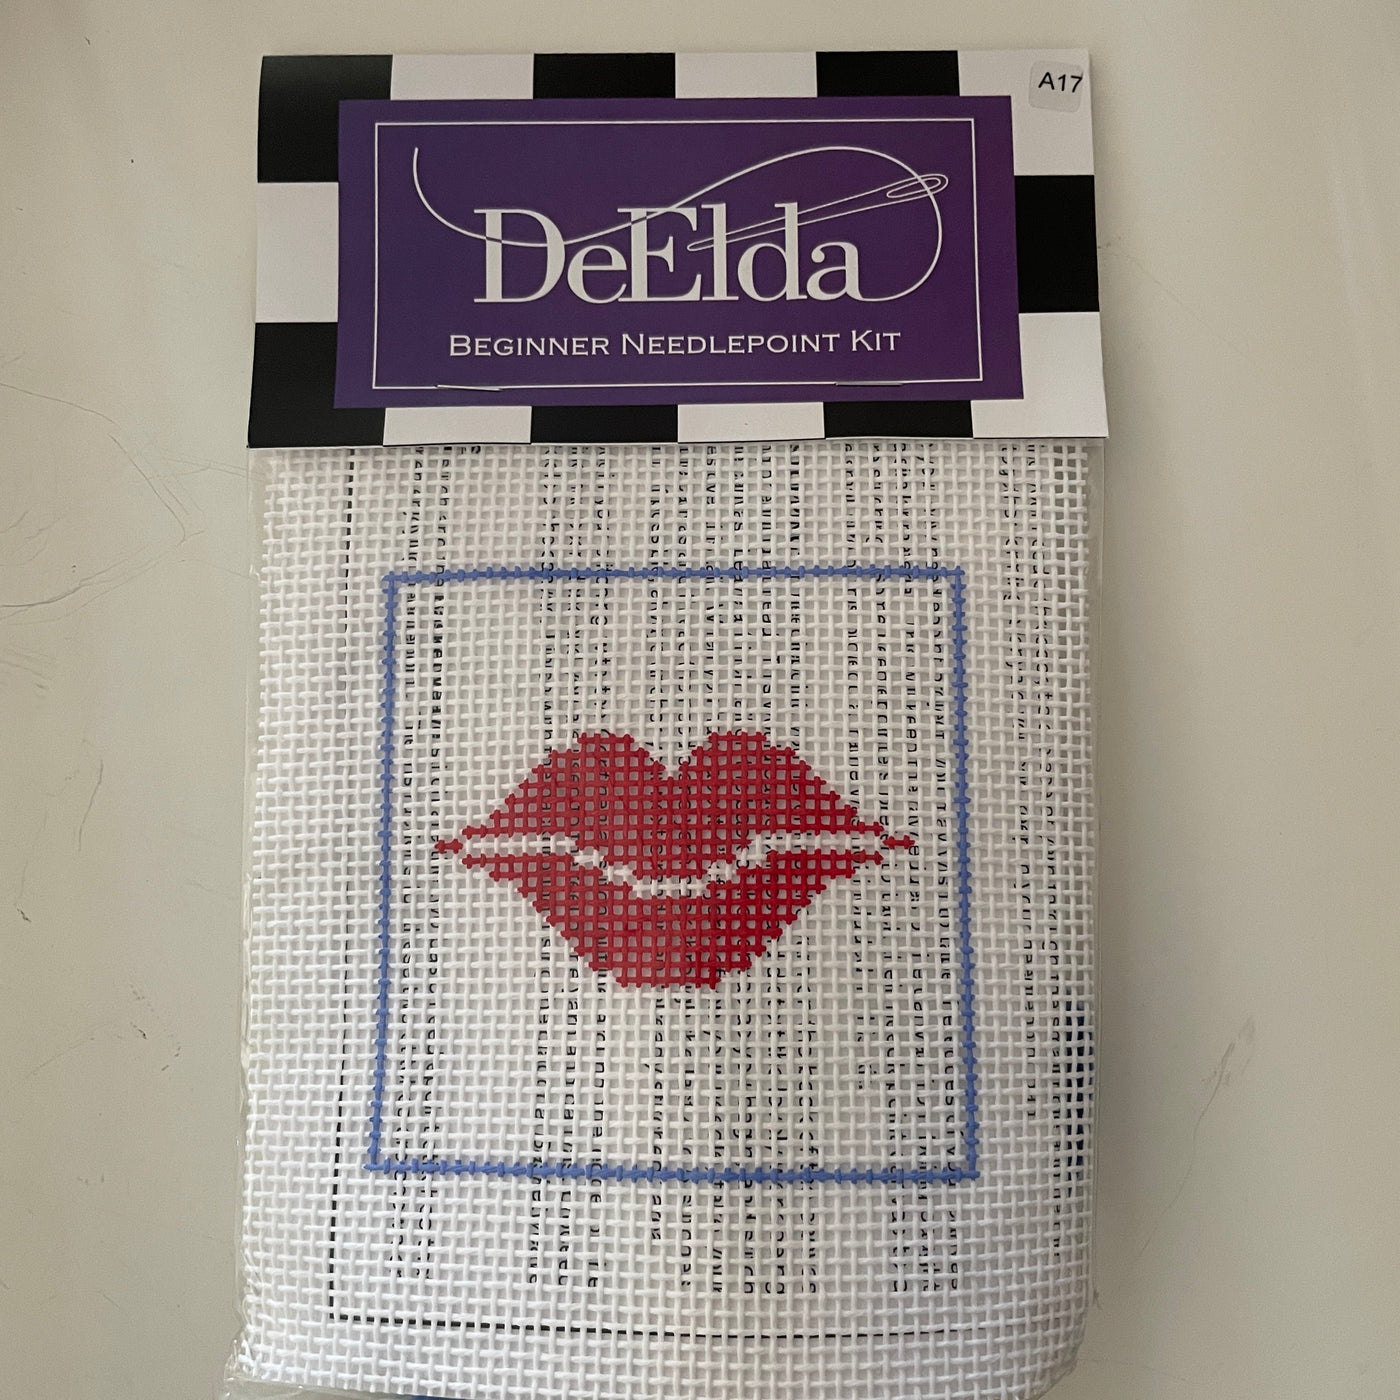 DeElda Lips Kit (includes fiber)